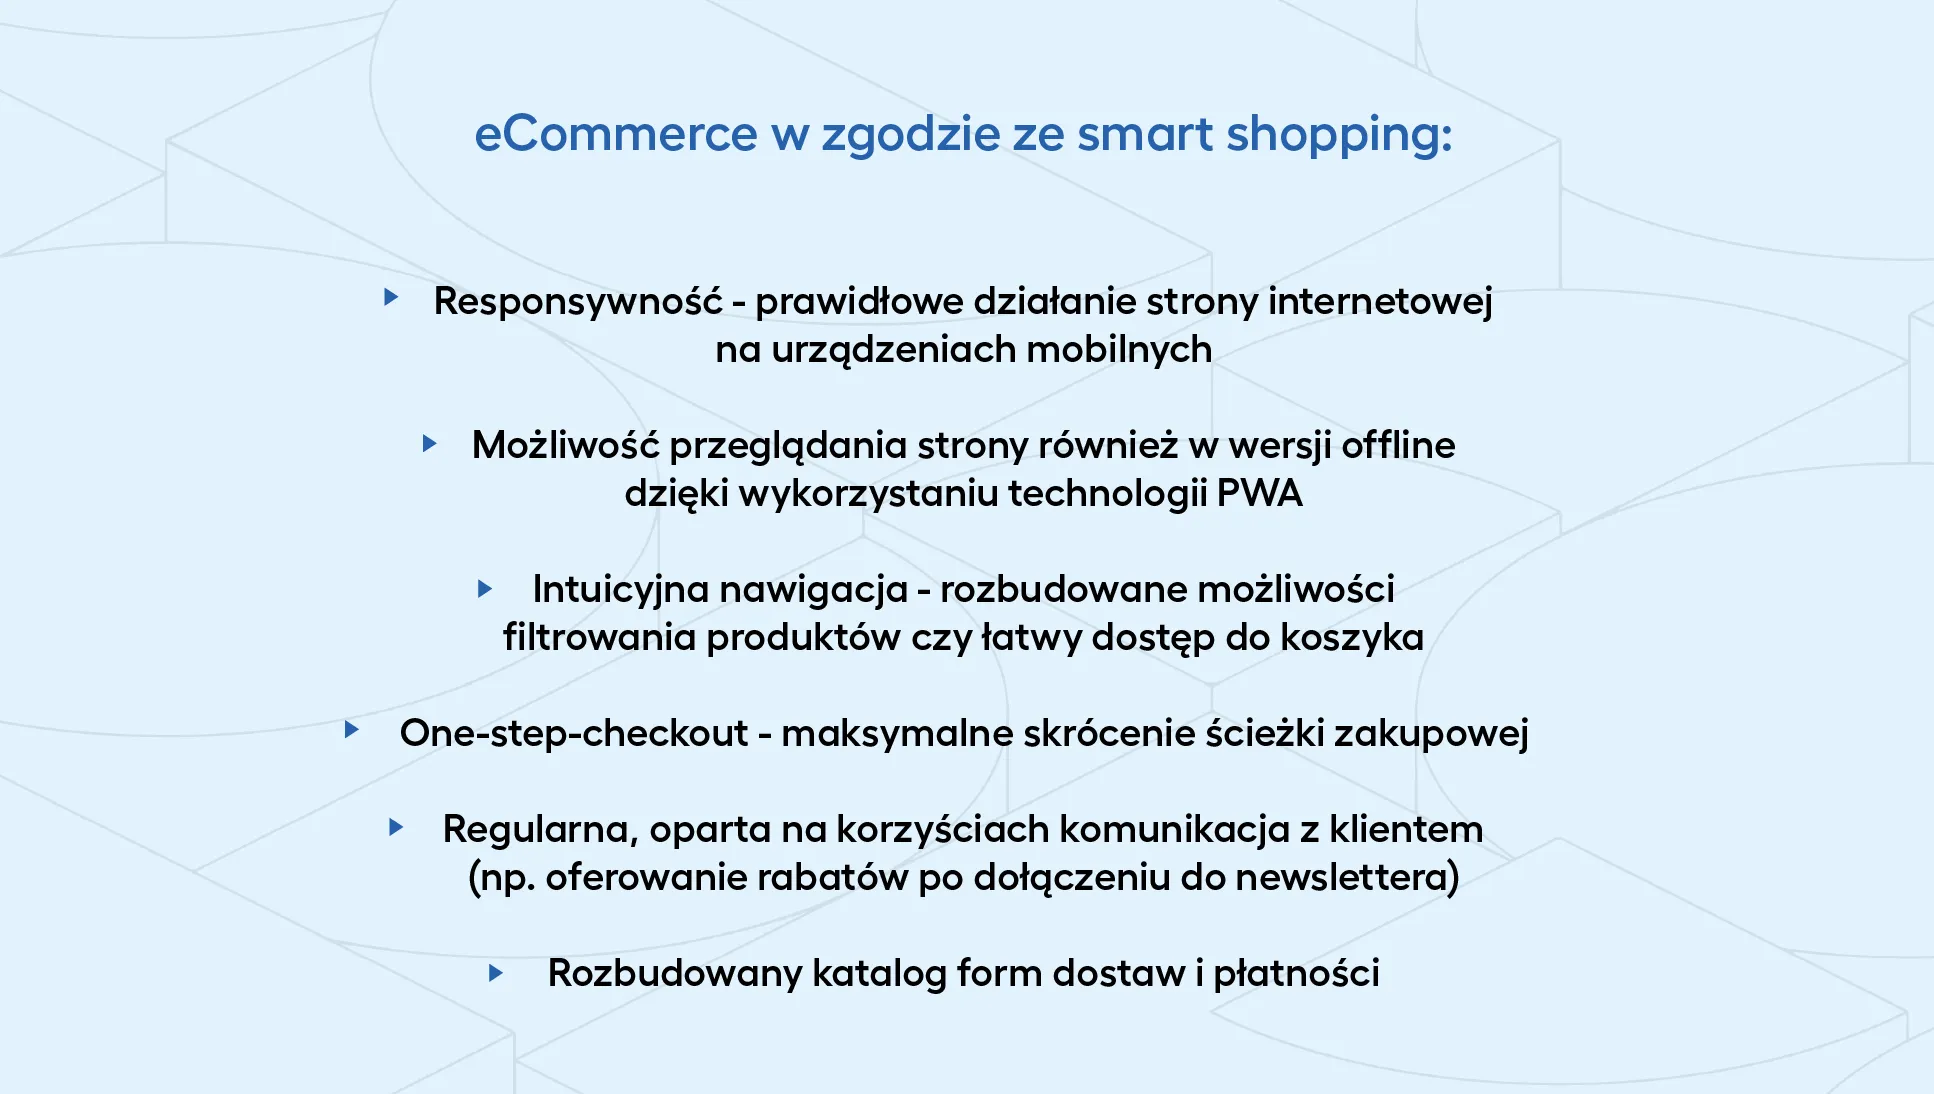 eCommerce smart